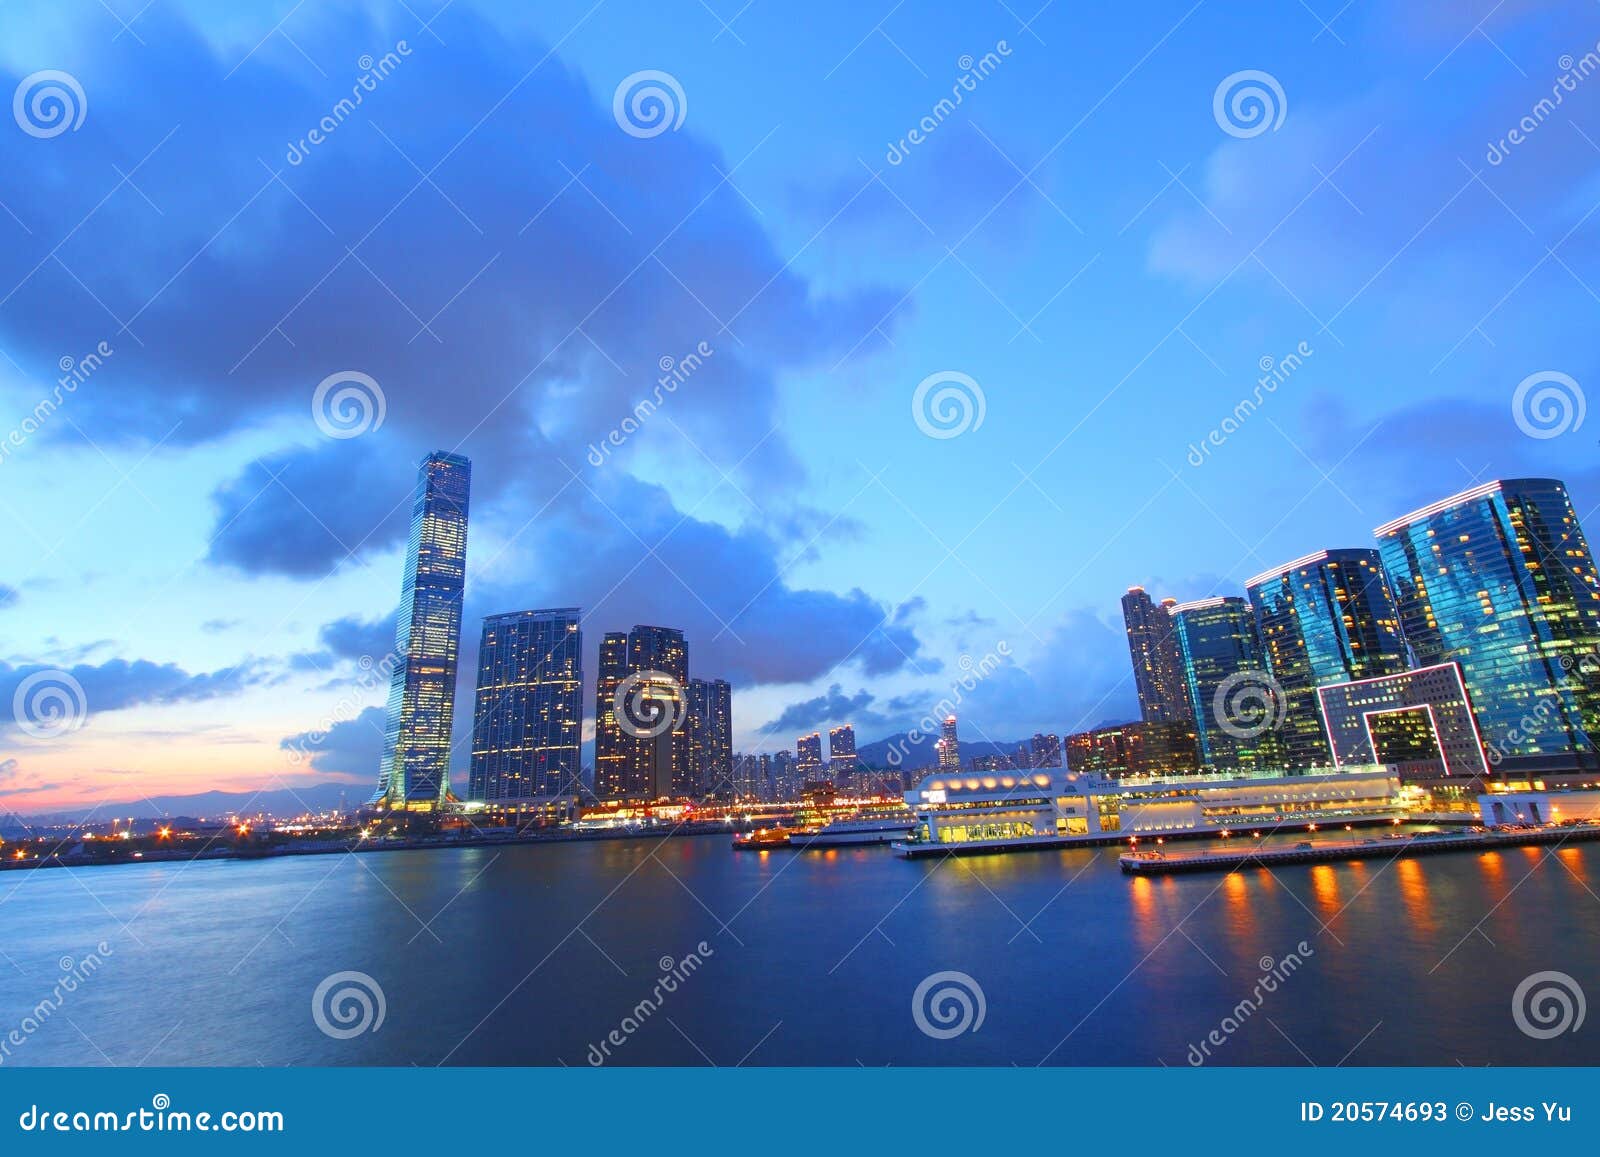 Hong Kong Sunset View at Kowloon District Stock Image - Image of ...